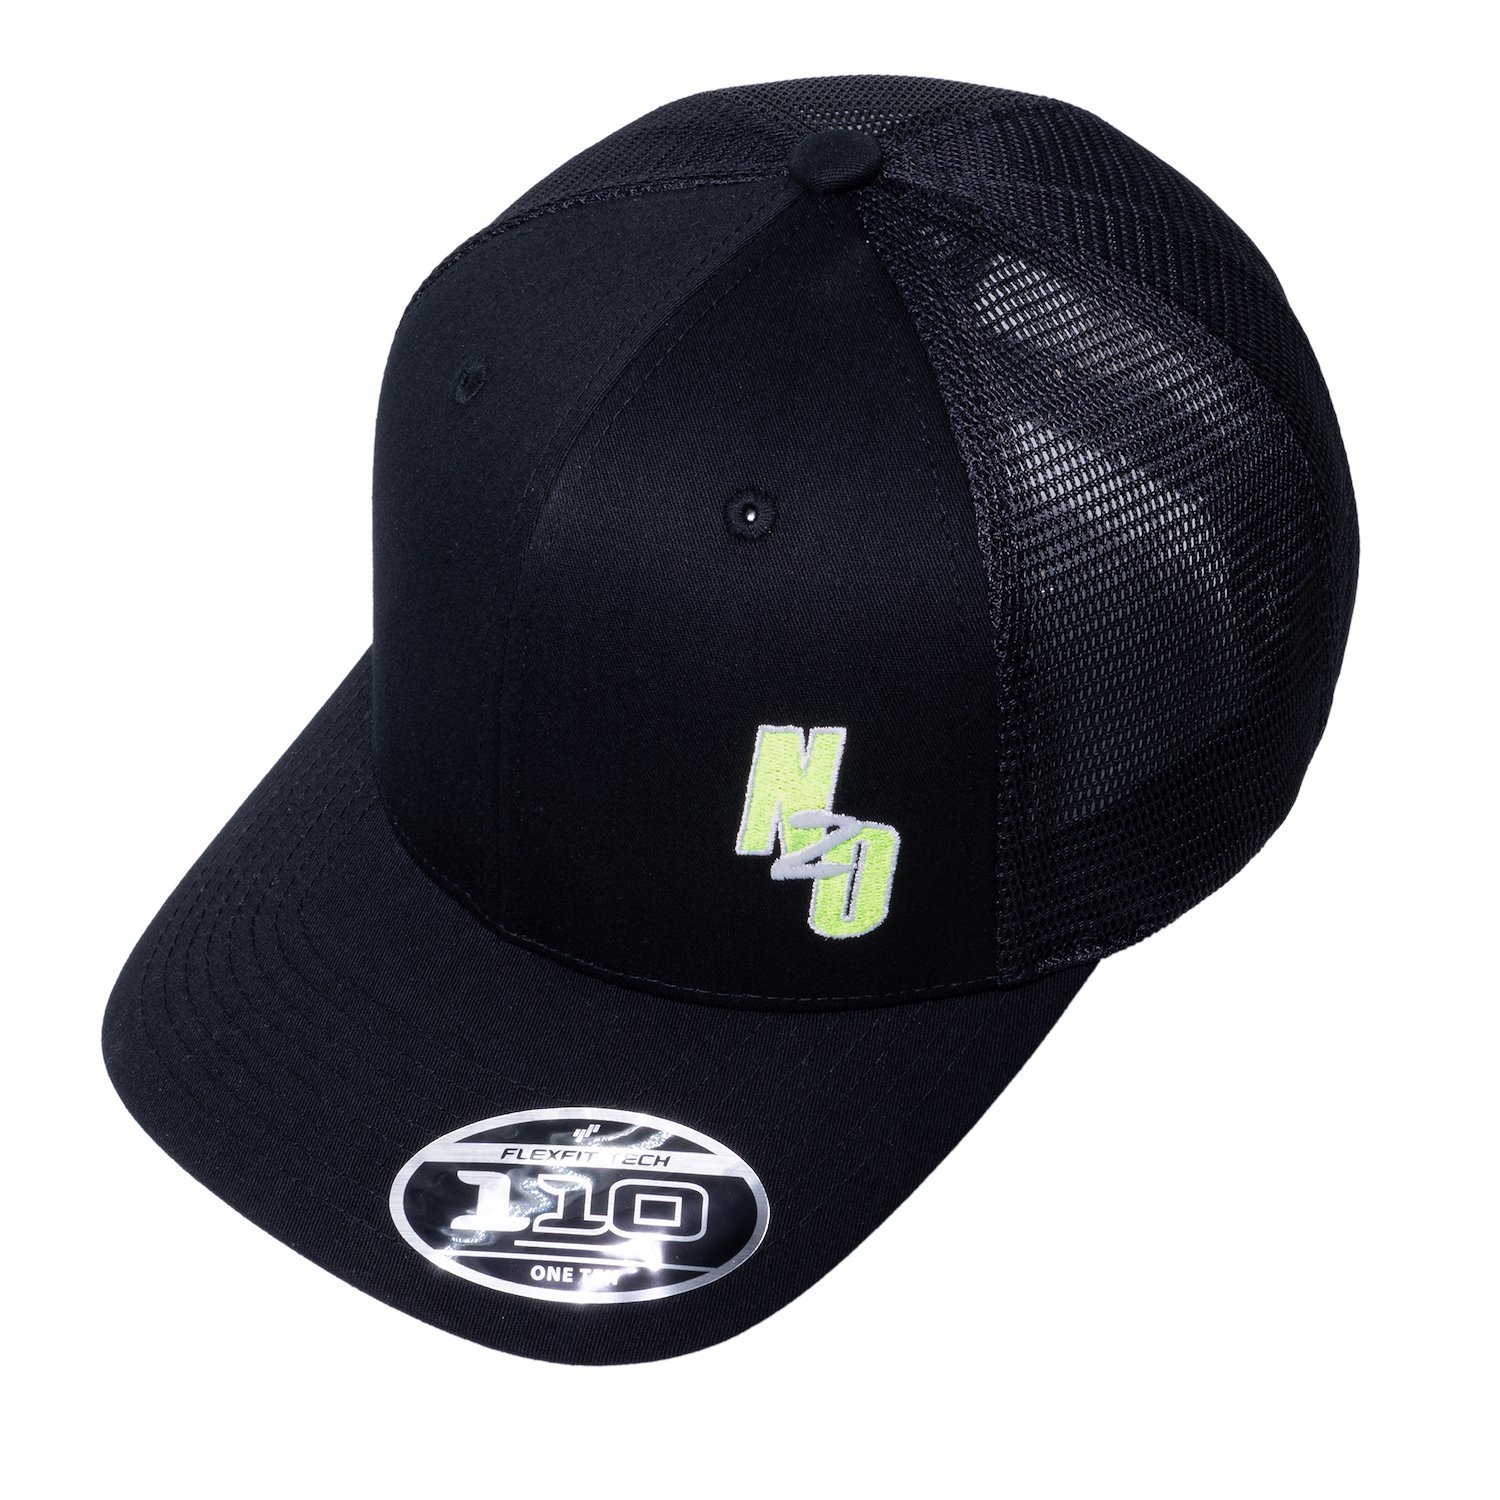 00-91029 Flex Fit Mesh Snap Back Hat, Black/Neon Green